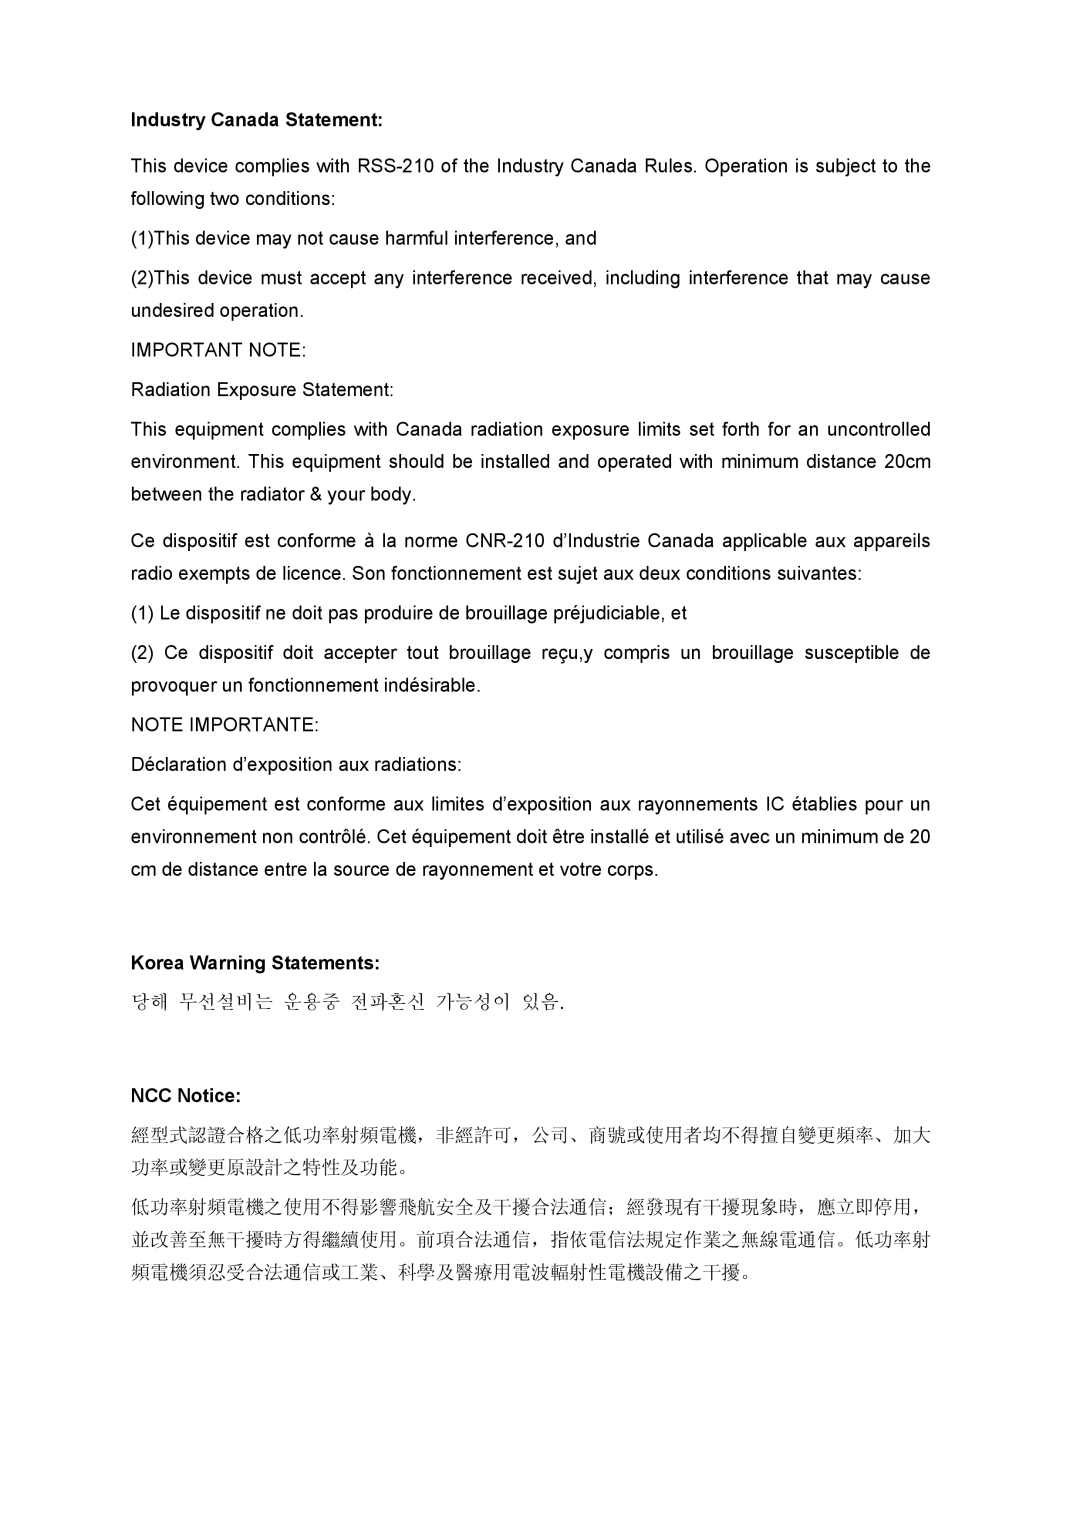 TP-Link TL-WN951-N, TL-WN951N manual Industry Canada Statement, Korea Warning Statements, NCC Notice 